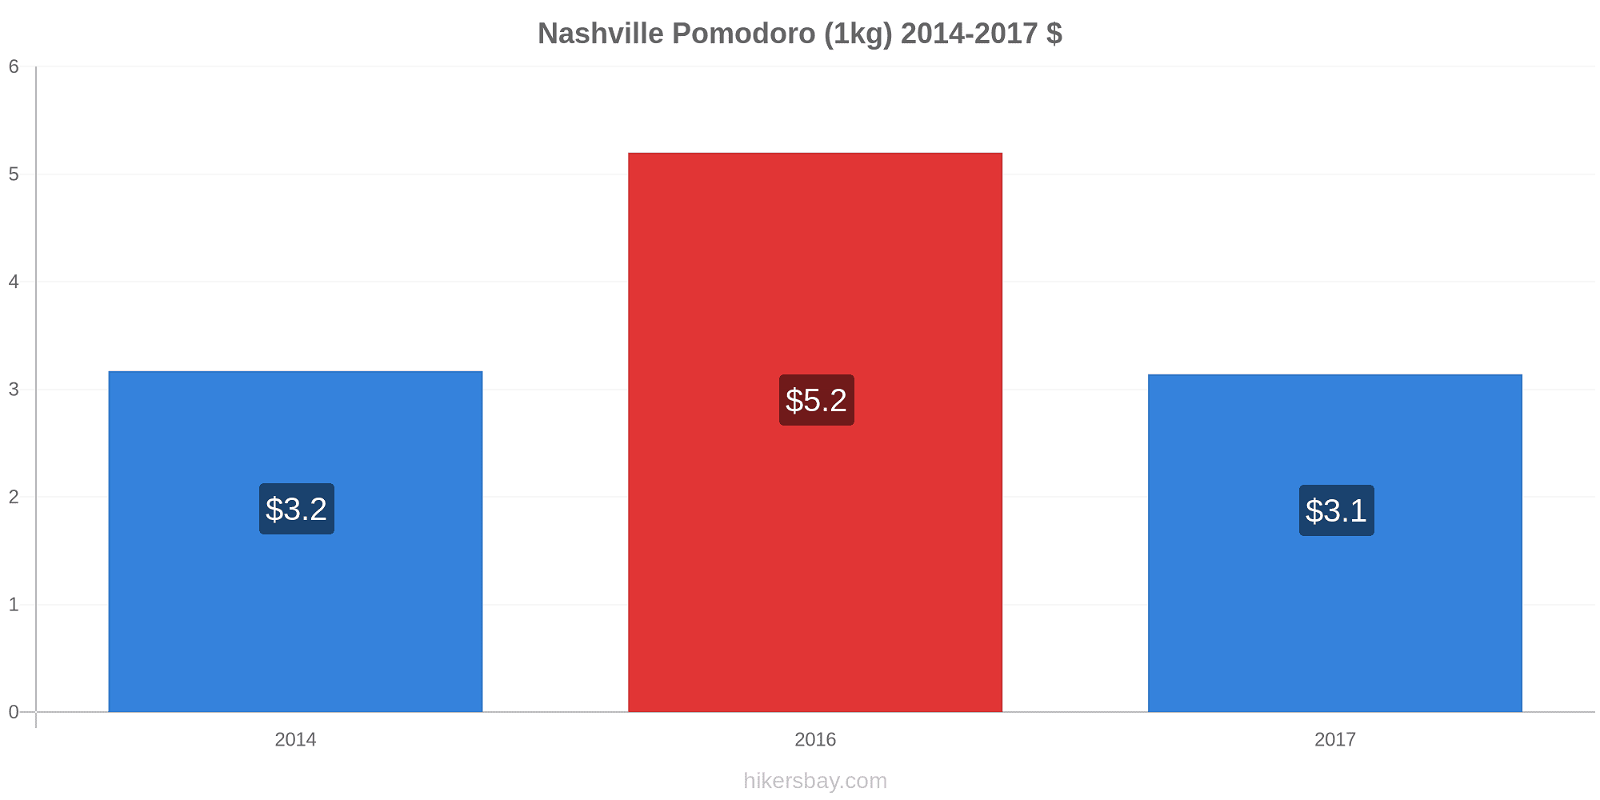 Nashville variazioni di prezzo Pomodoro (1kg) hikersbay.com